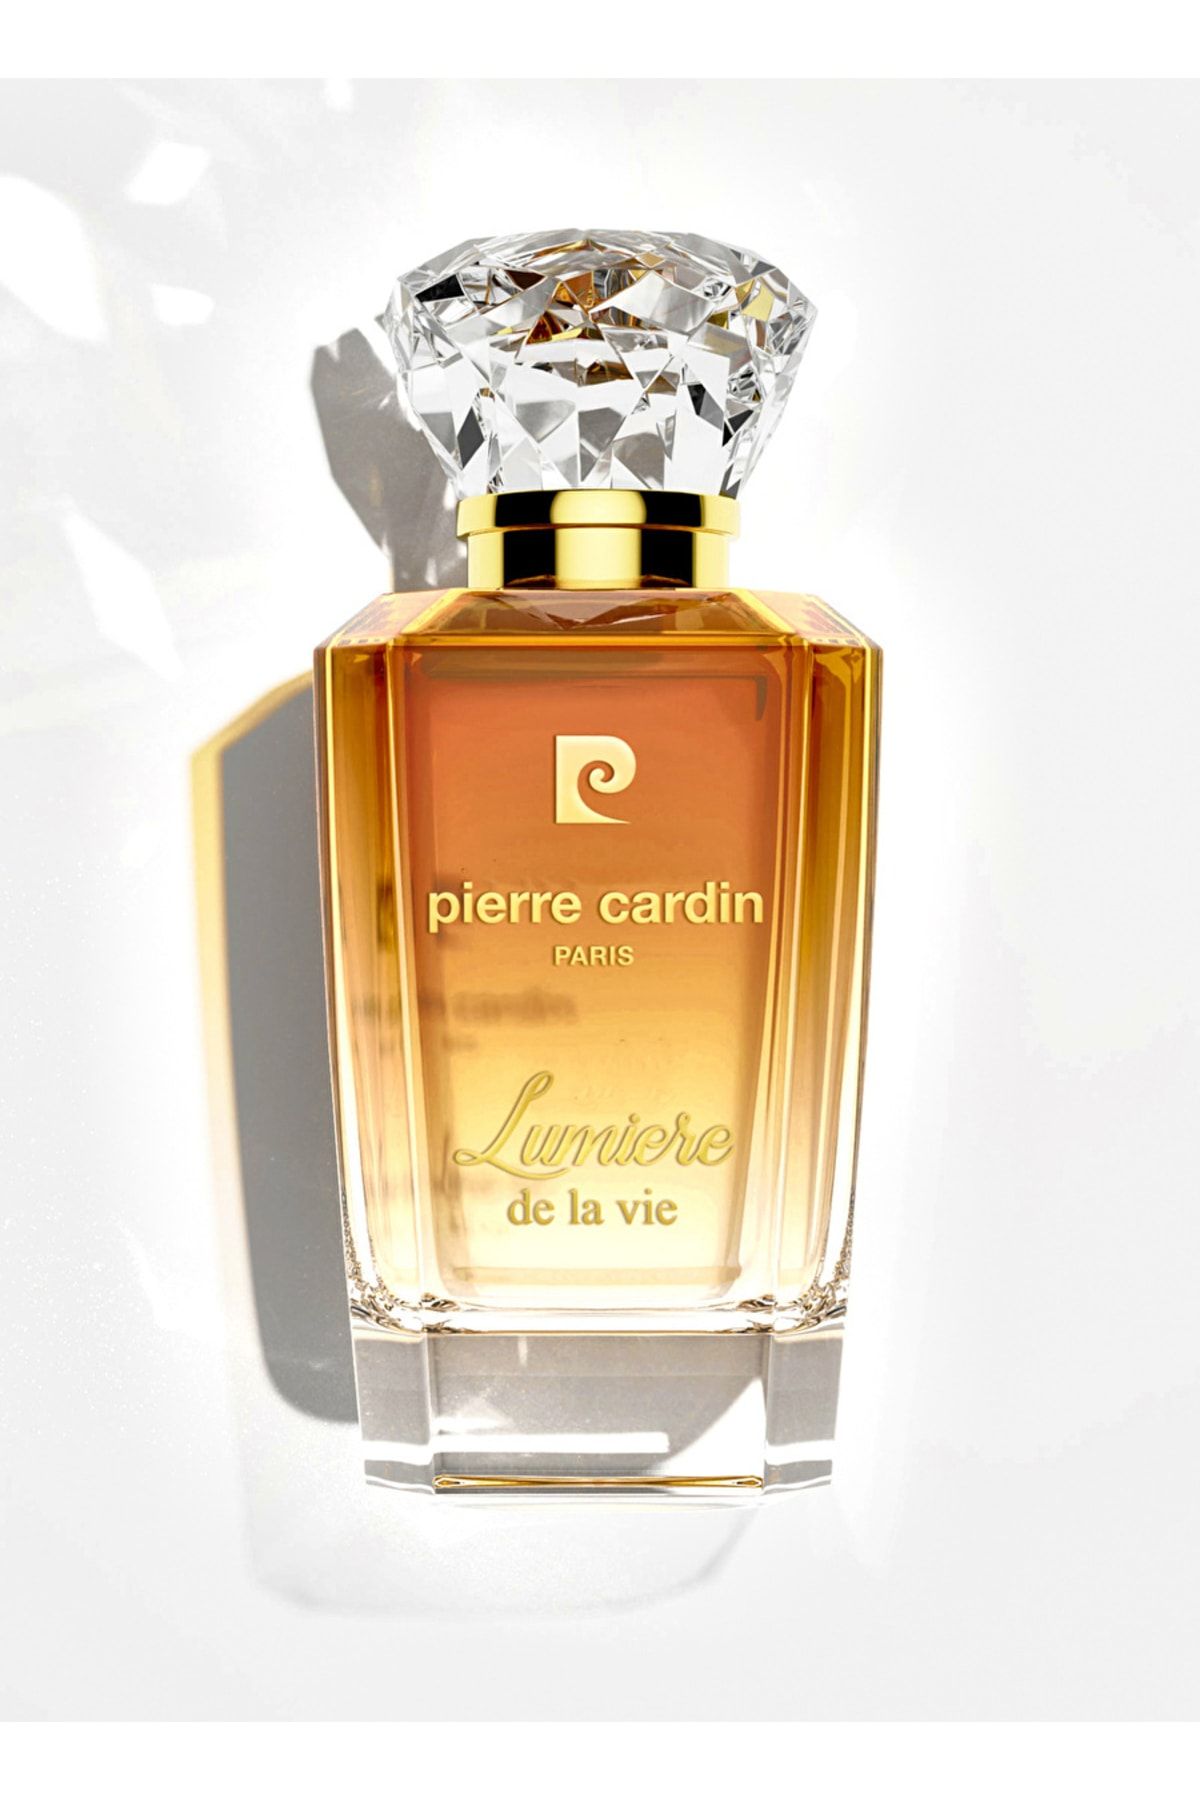 Pierre Cardin Lumiere De La Vie Edp 100 Ml Kadın Parfümü Greyfurt Şeftali Cassis